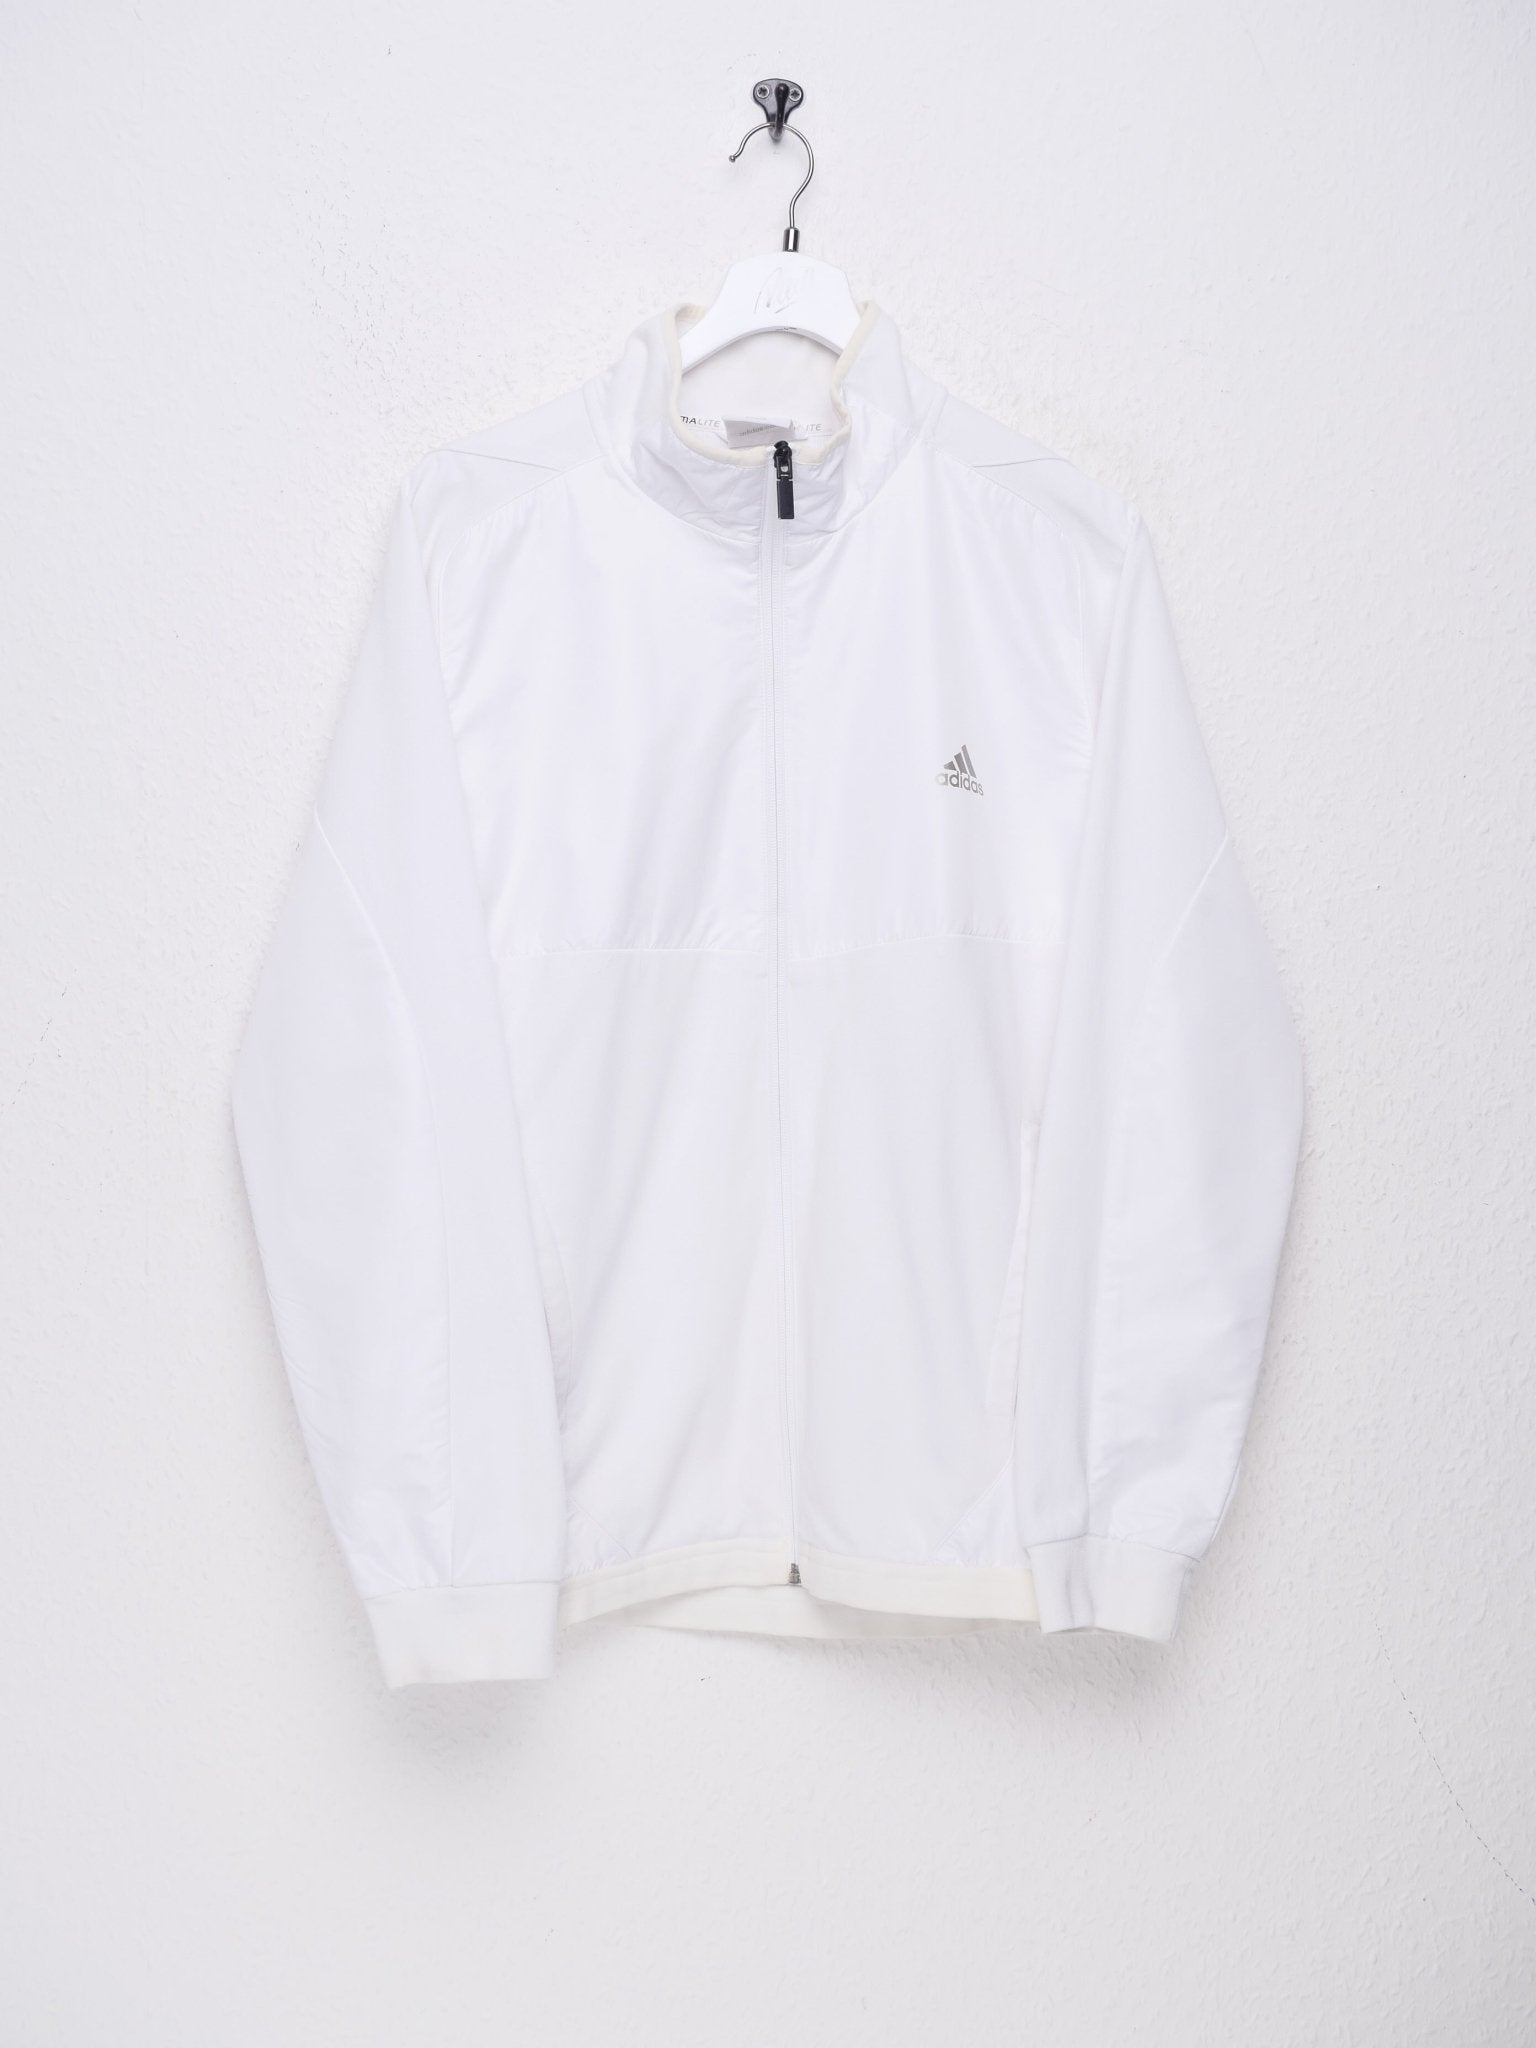 Adidas printed Logo white Track Jacket - Peeces